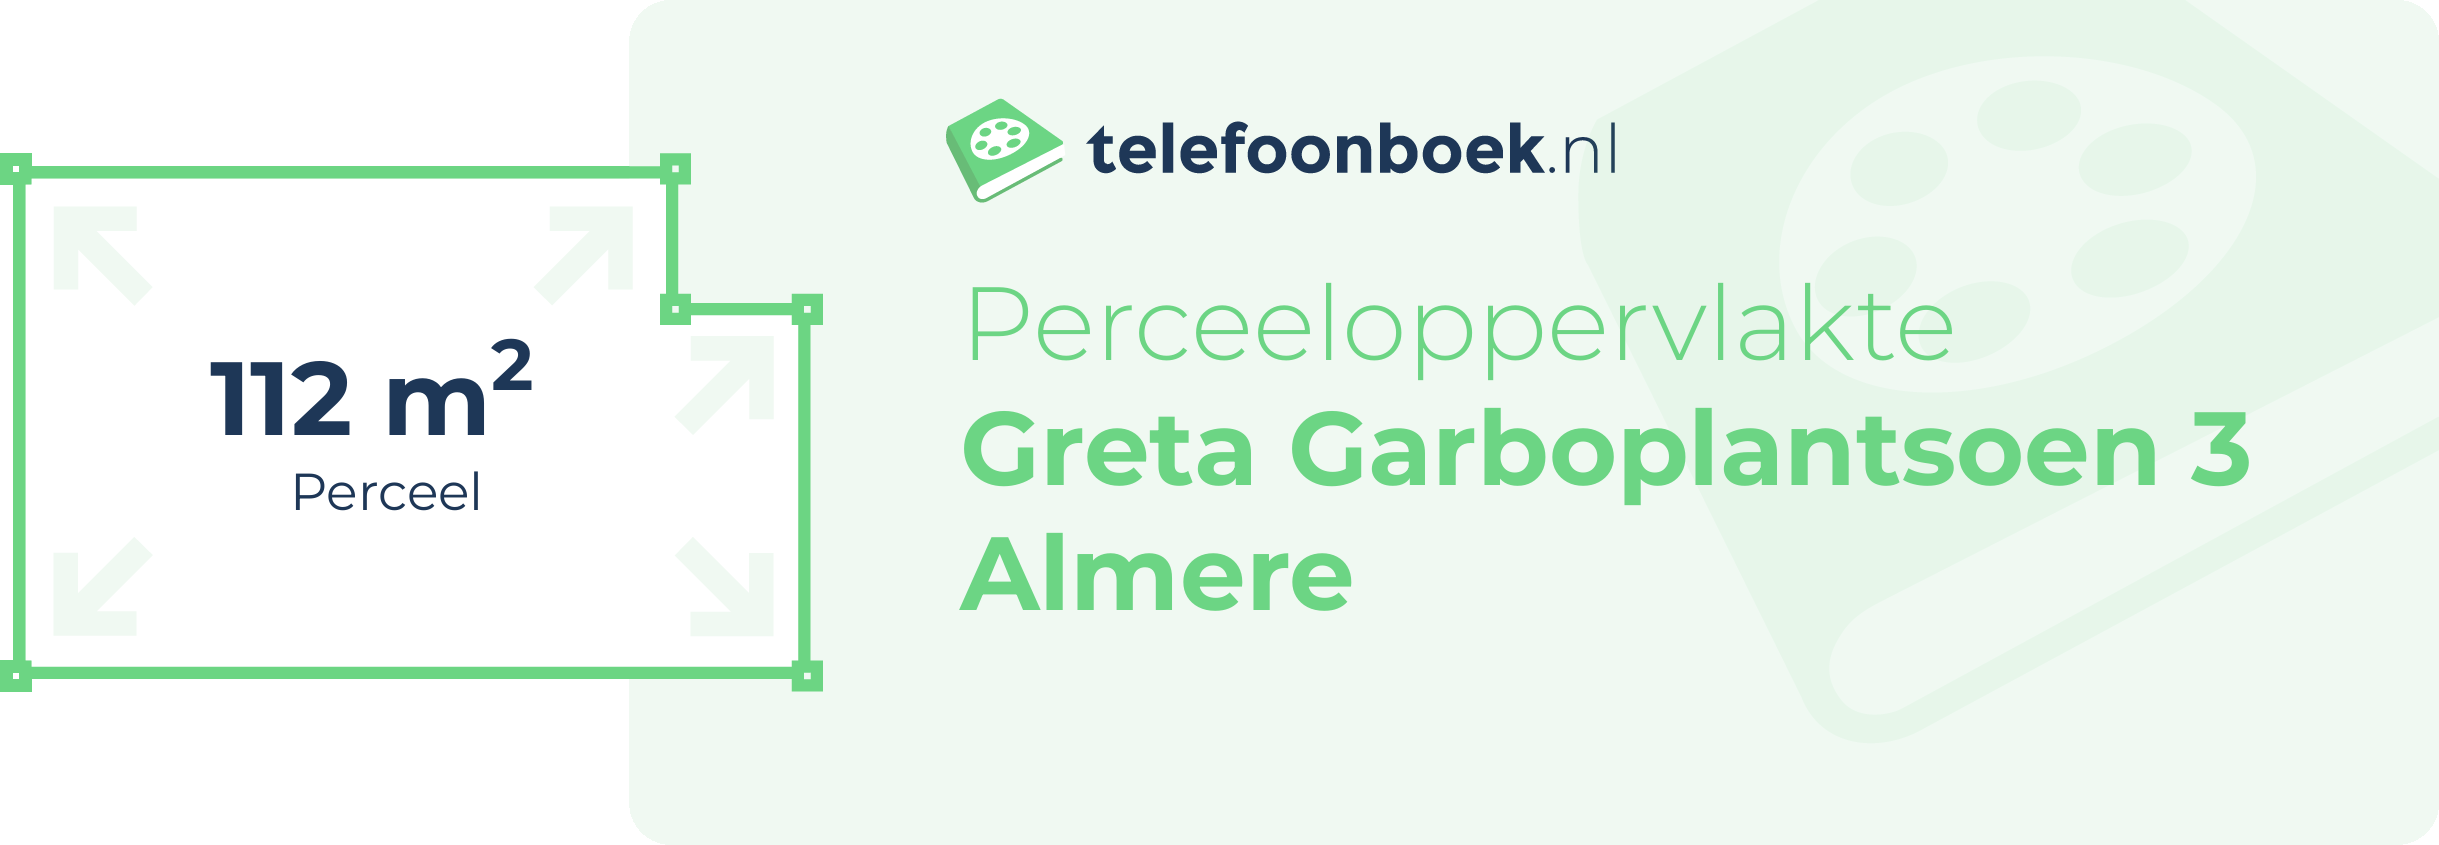 Perceeloppervlakte Greta Garboplantsoen 3 Almere